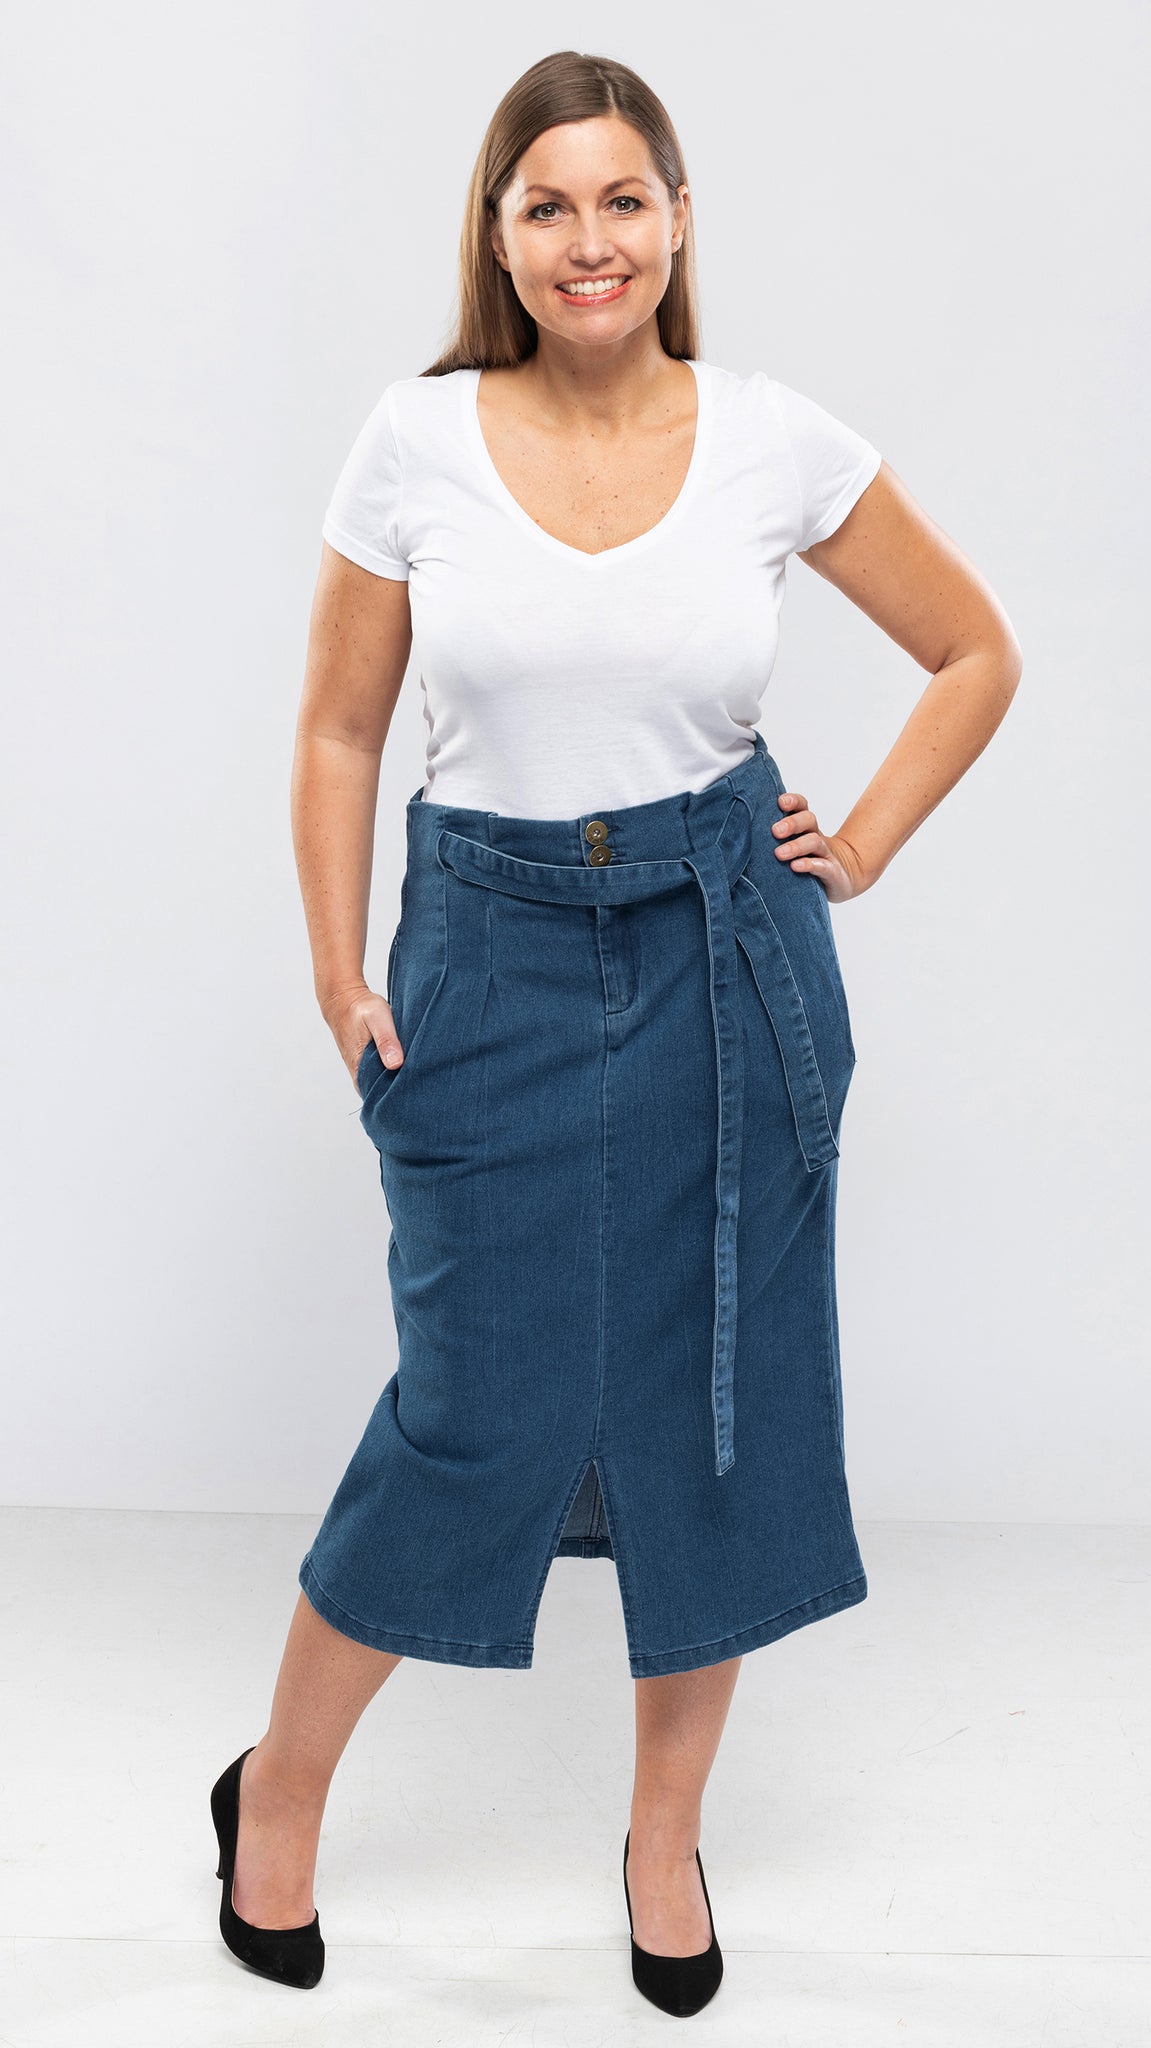 Women's Long Denim Skirt w/Belt-2 Colors/4 Sizes-12pcs/pack ($17.90/pc)